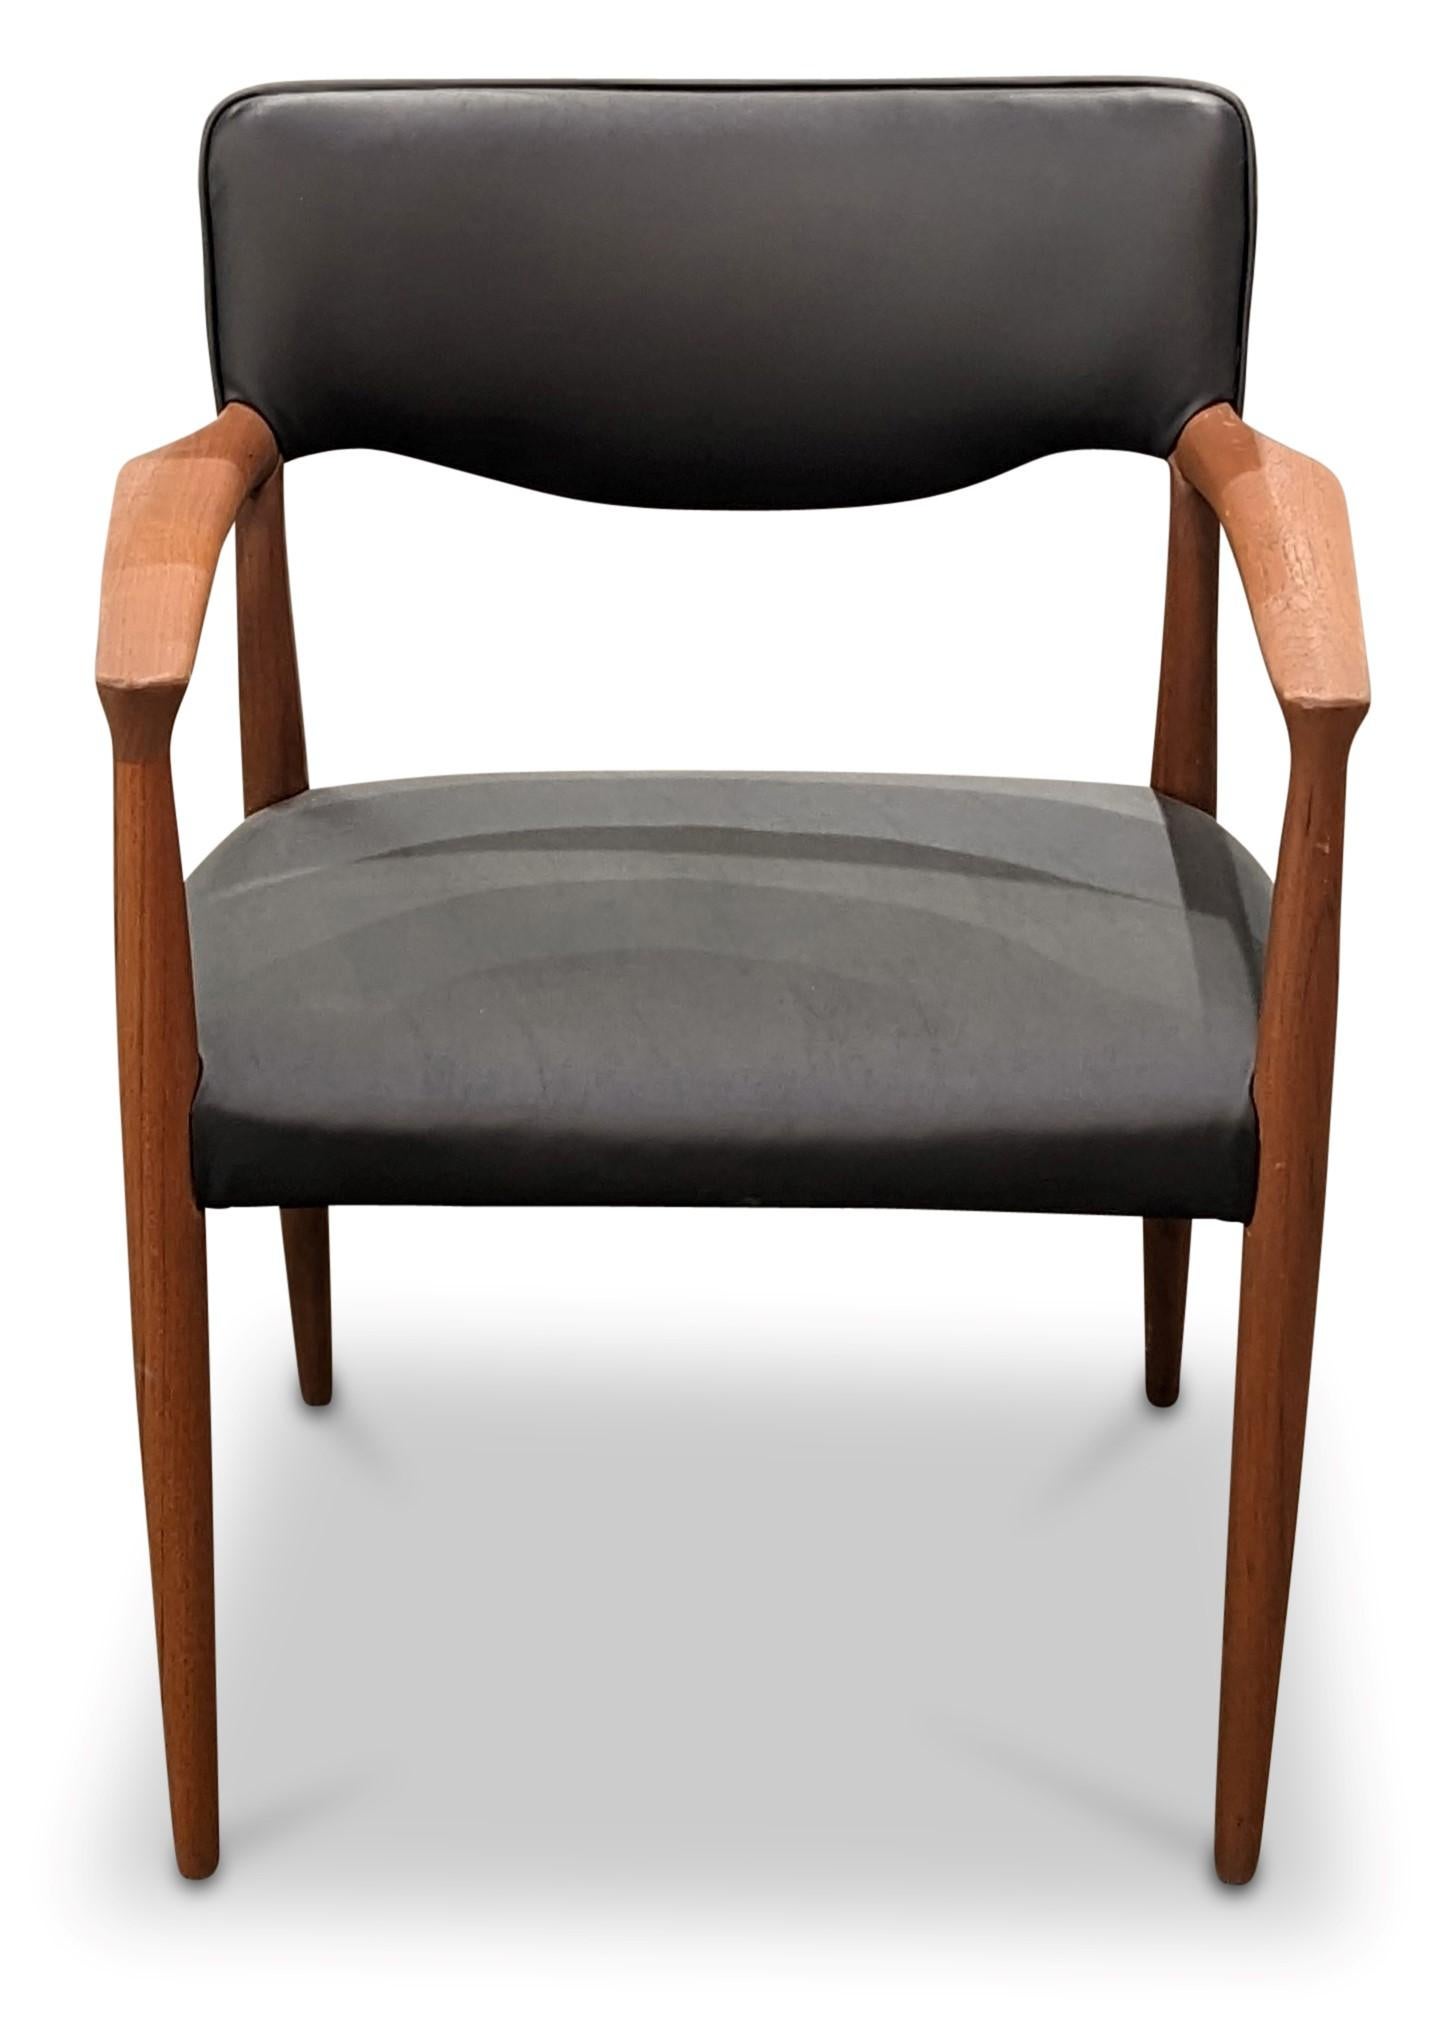 Vintage Danish Mid Century Teak Arm / Desk Chair - 122206 2